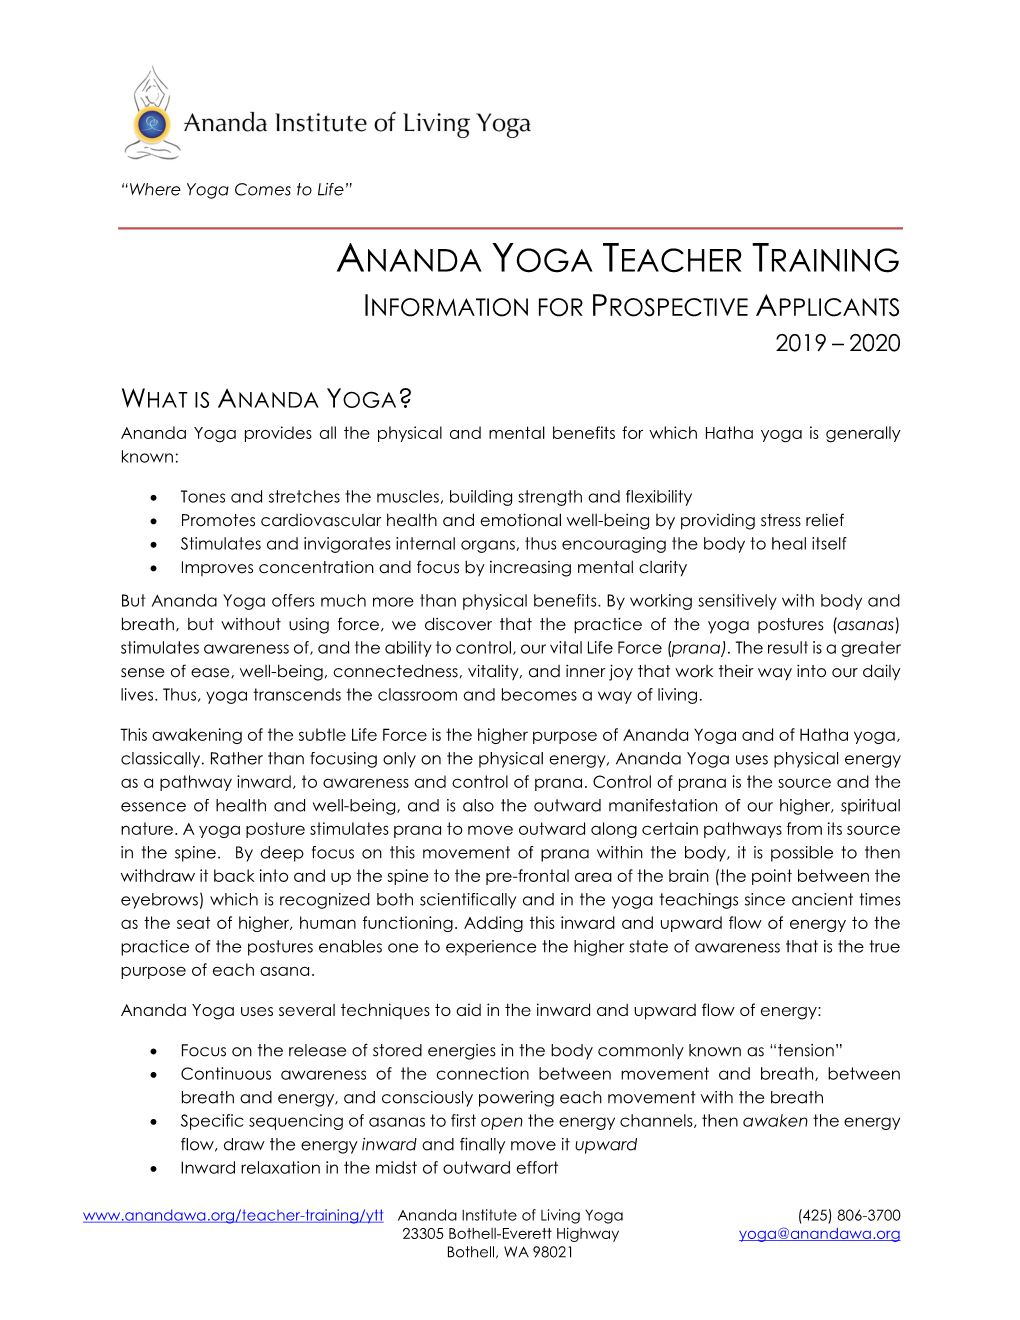 Ananda Yoga Teacher Training Information for Prospective Applicants 2019 – 2020